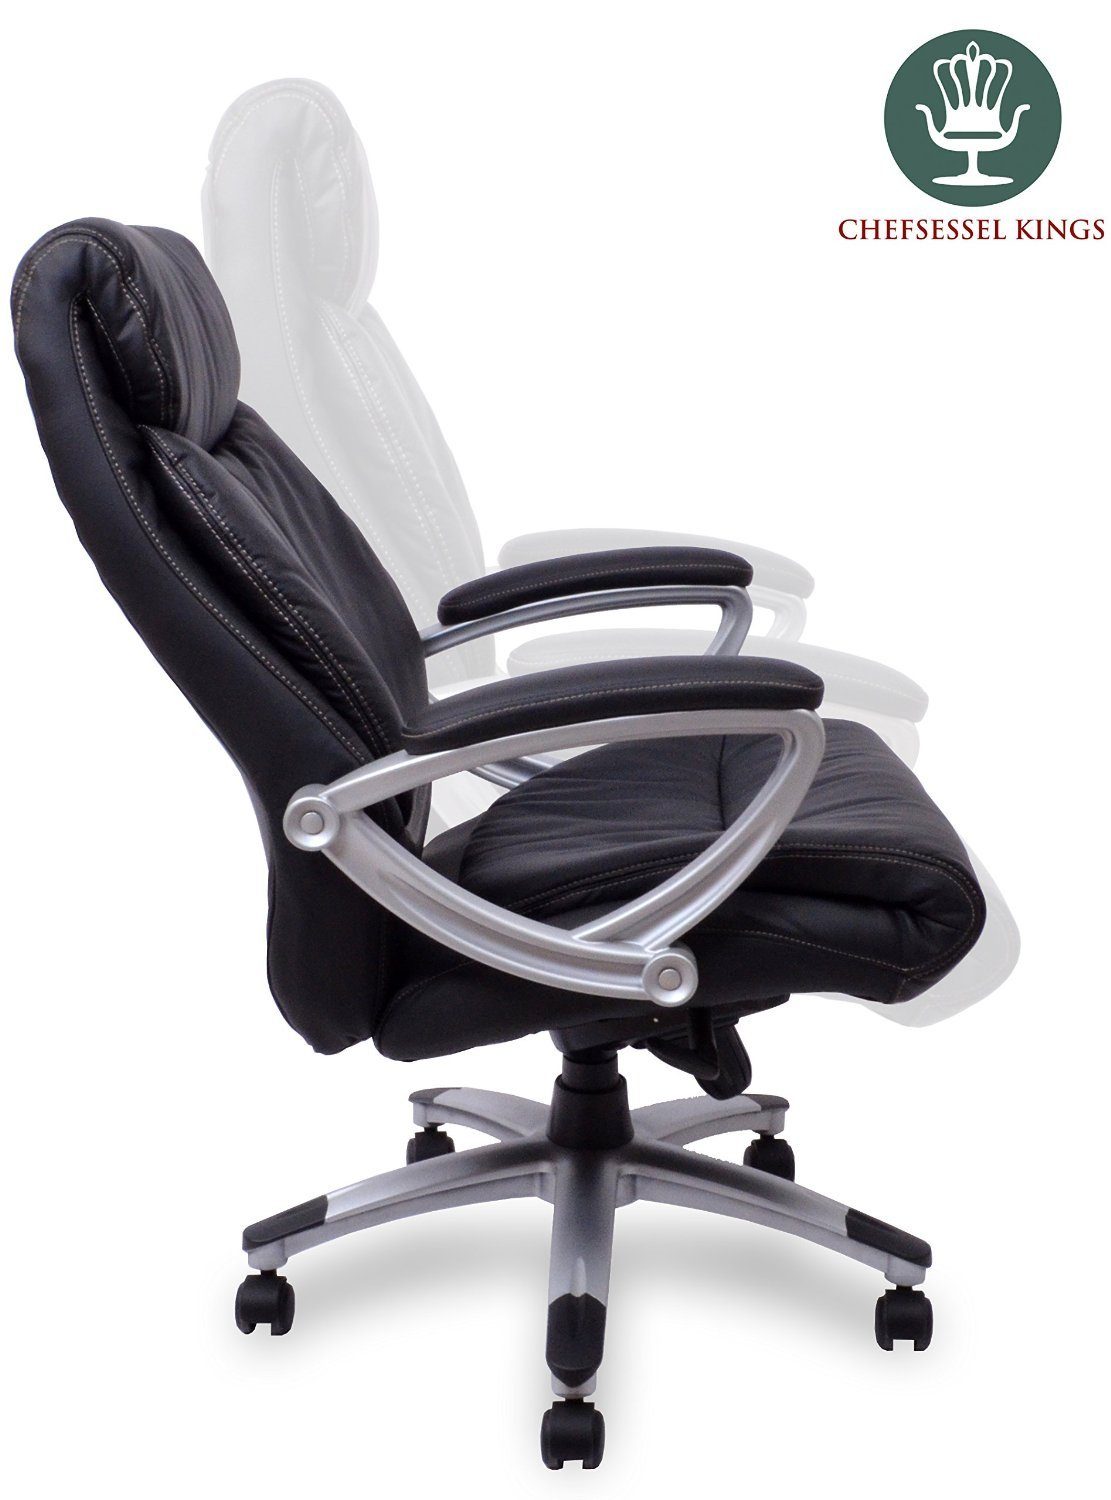 Kijng Chefsessel Kings Schwarz Leder - Ergonomischer Bürostuhl (Kein Set)